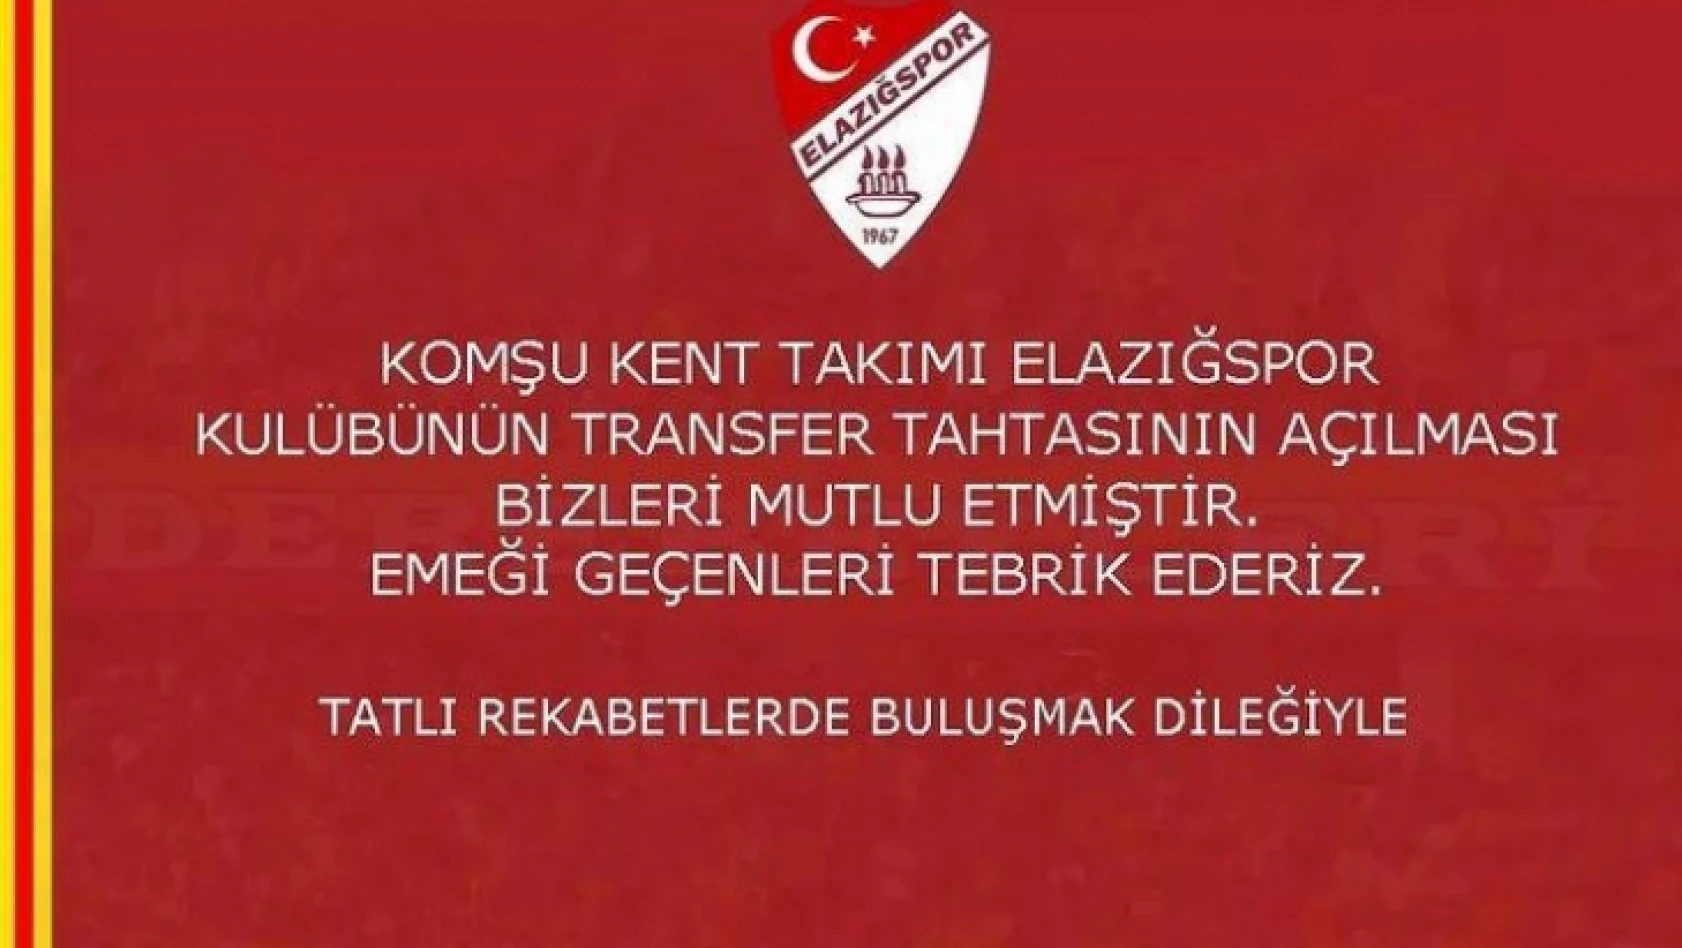 Elazığspor'un transfer yasağını kaldırması Malatya'yı da sevindirdi